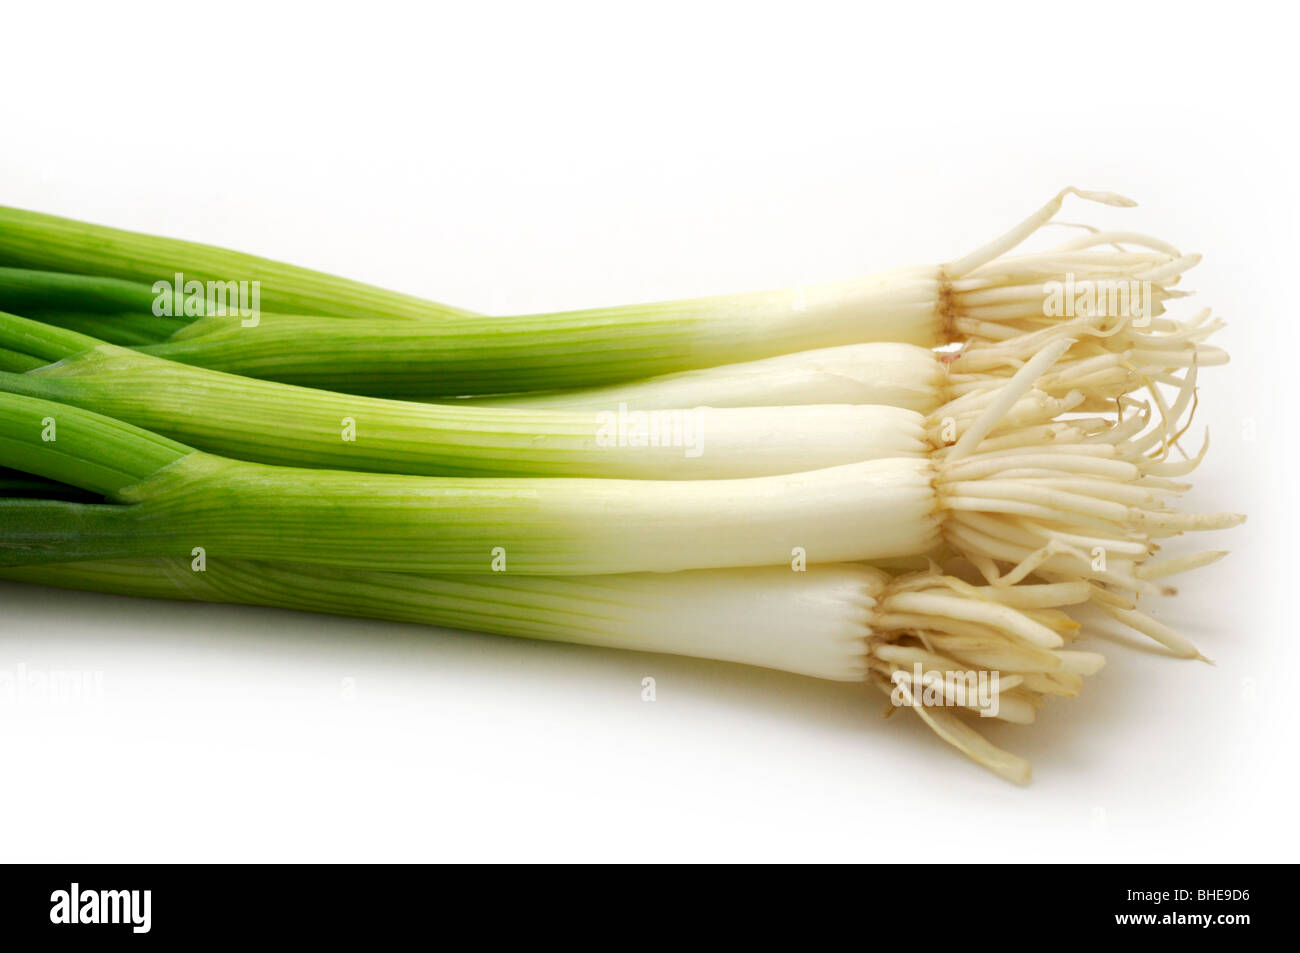 Green/Spring Onion Stock Photo